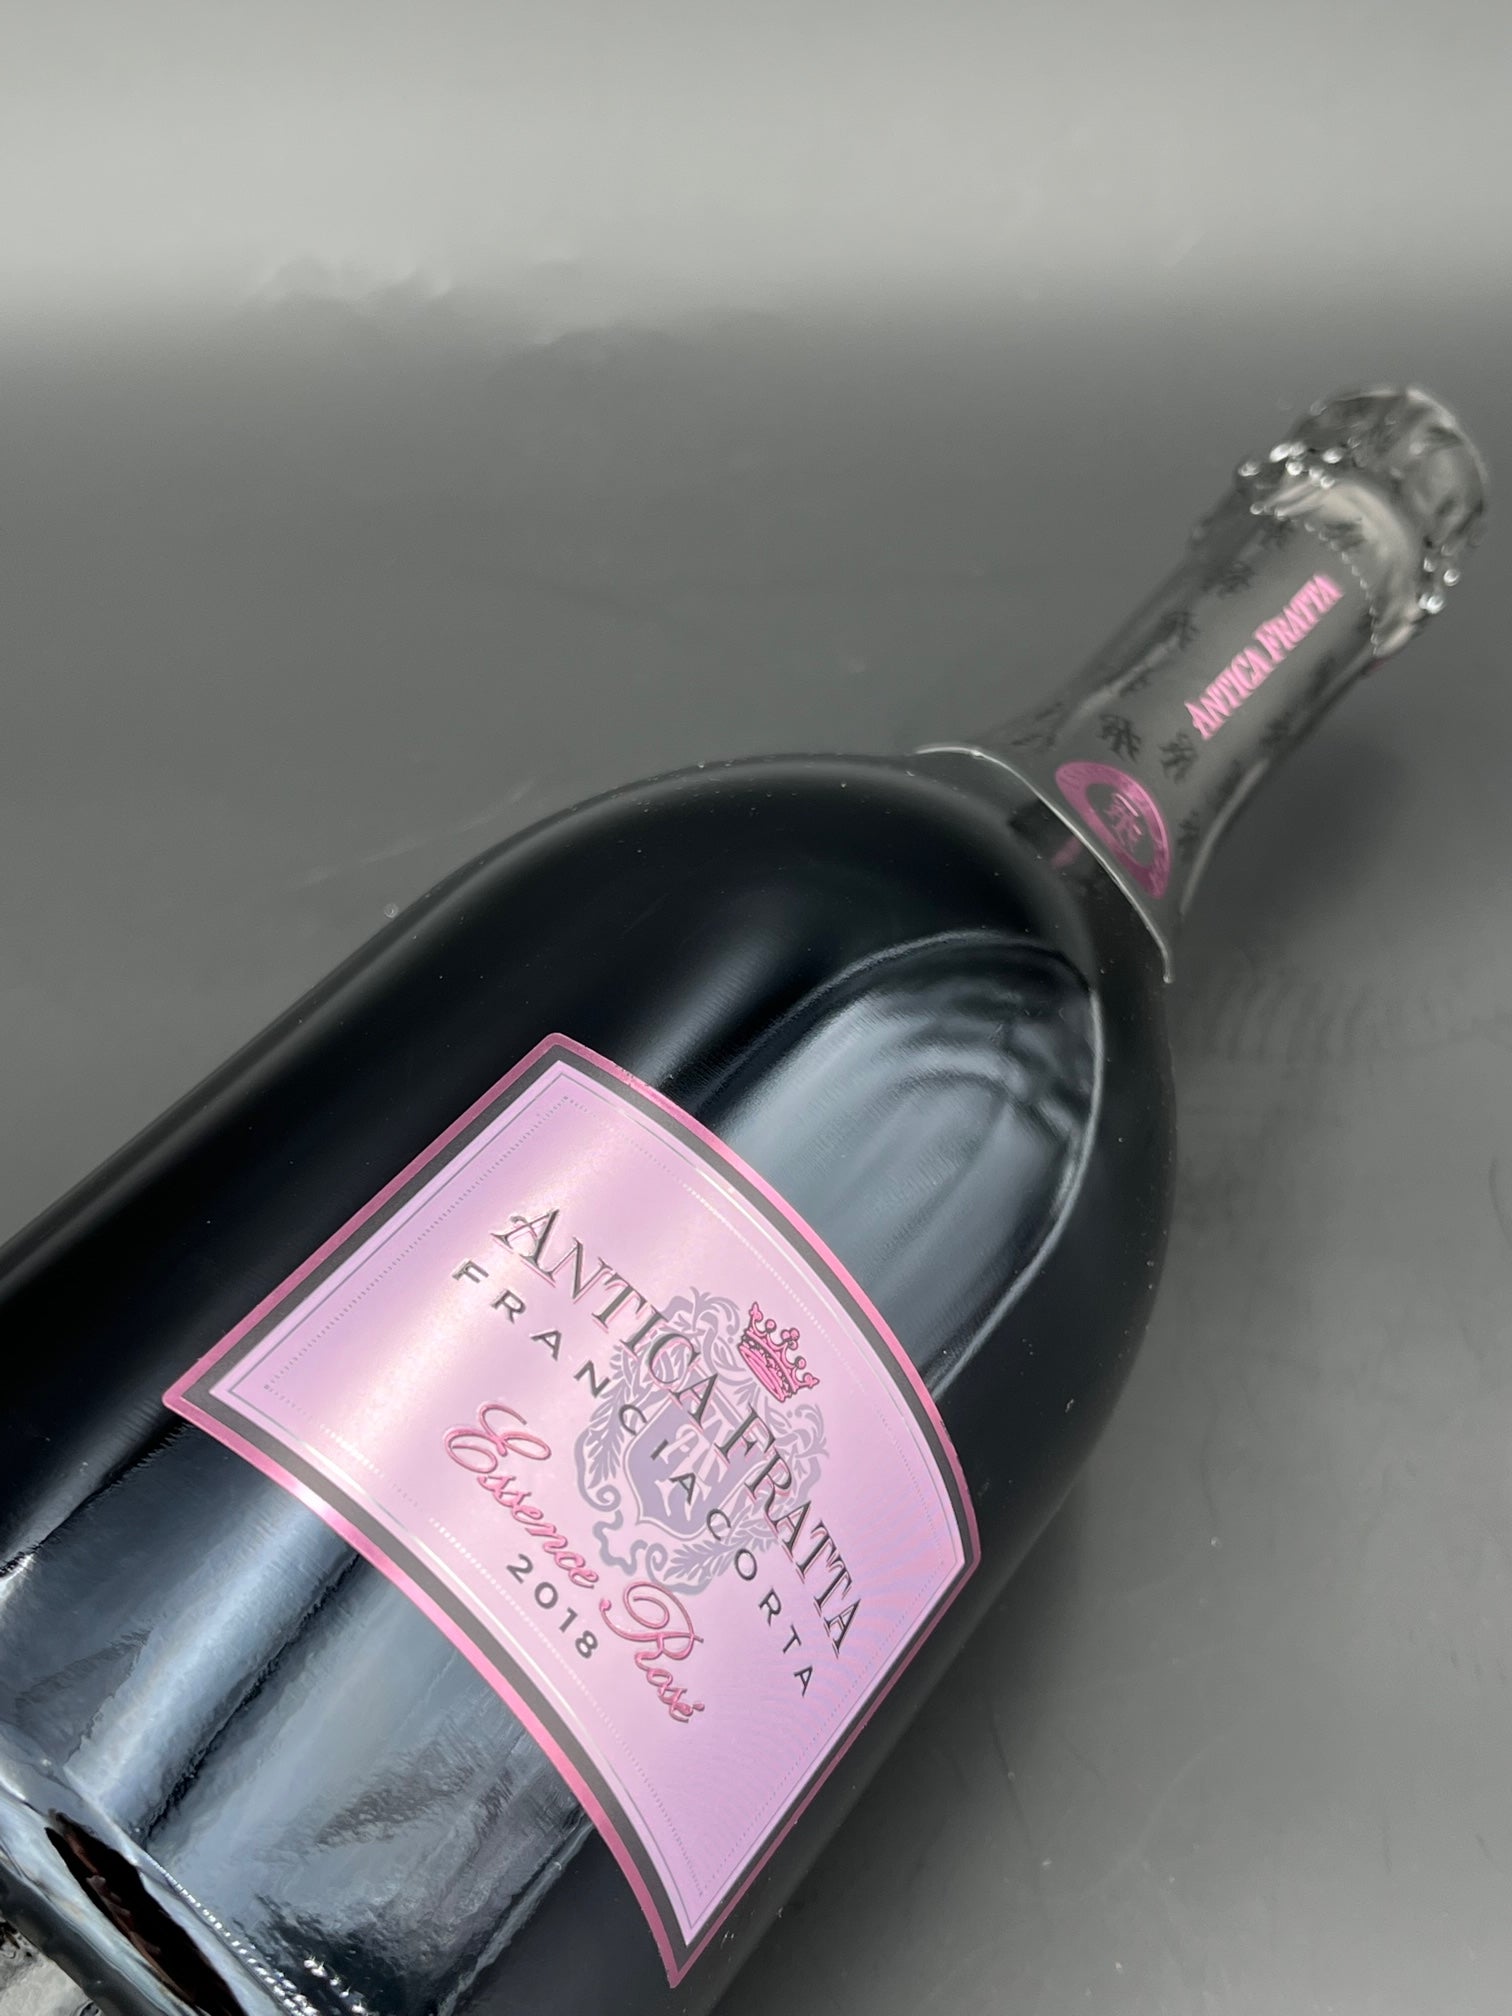 Essence Rosé Franciacorta Brut Millesimato Normalflasche | Antica Fratta